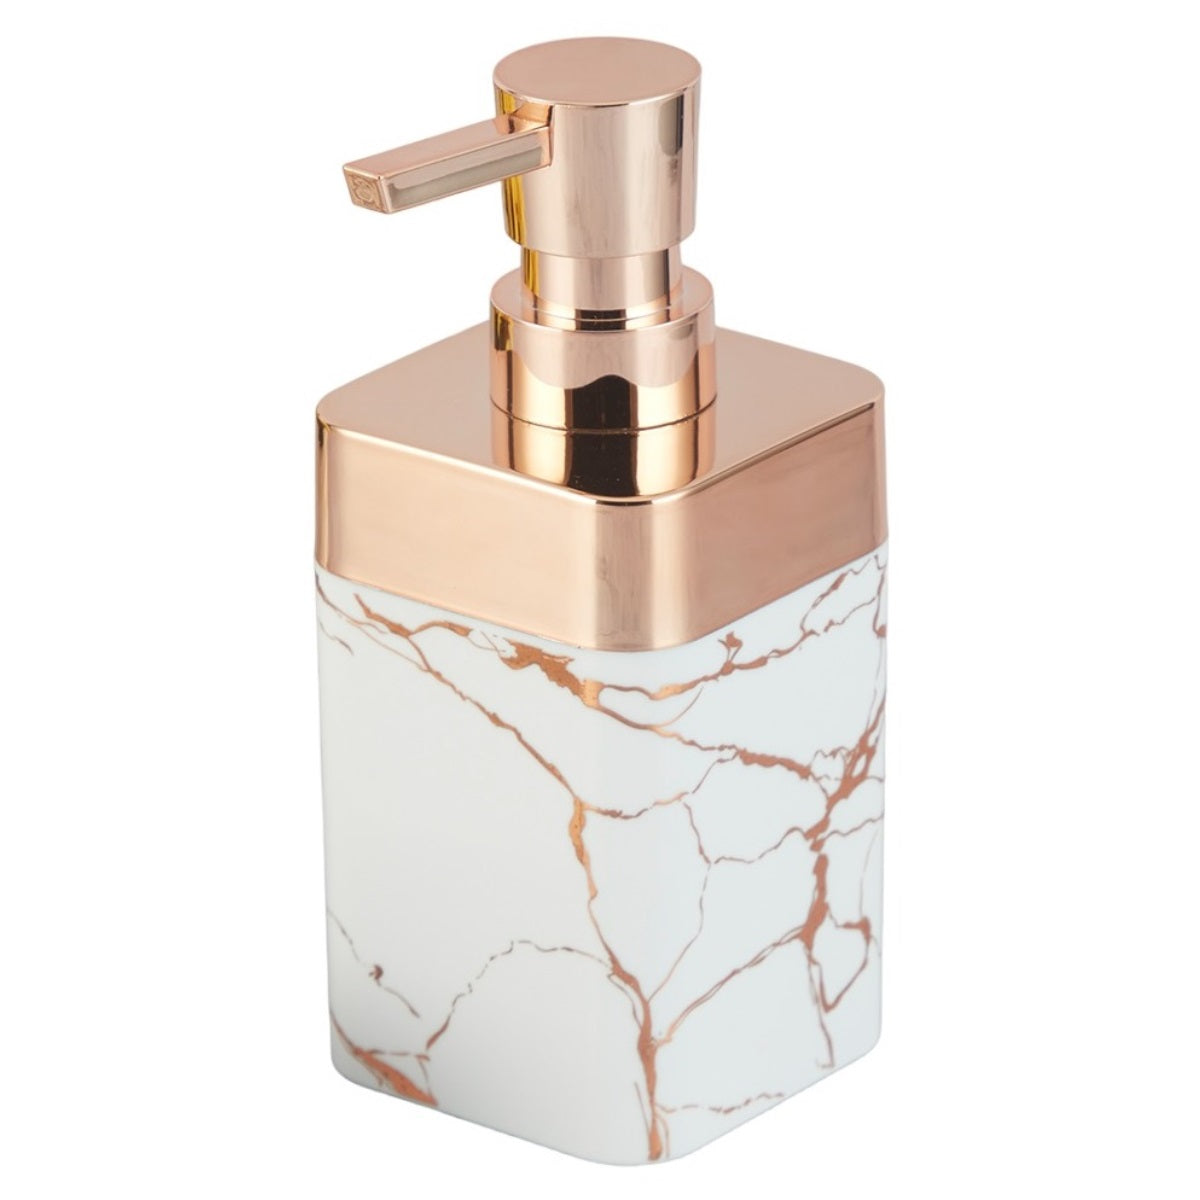 Acrylic Soap Dispenser Pump for Bathroom (9995)